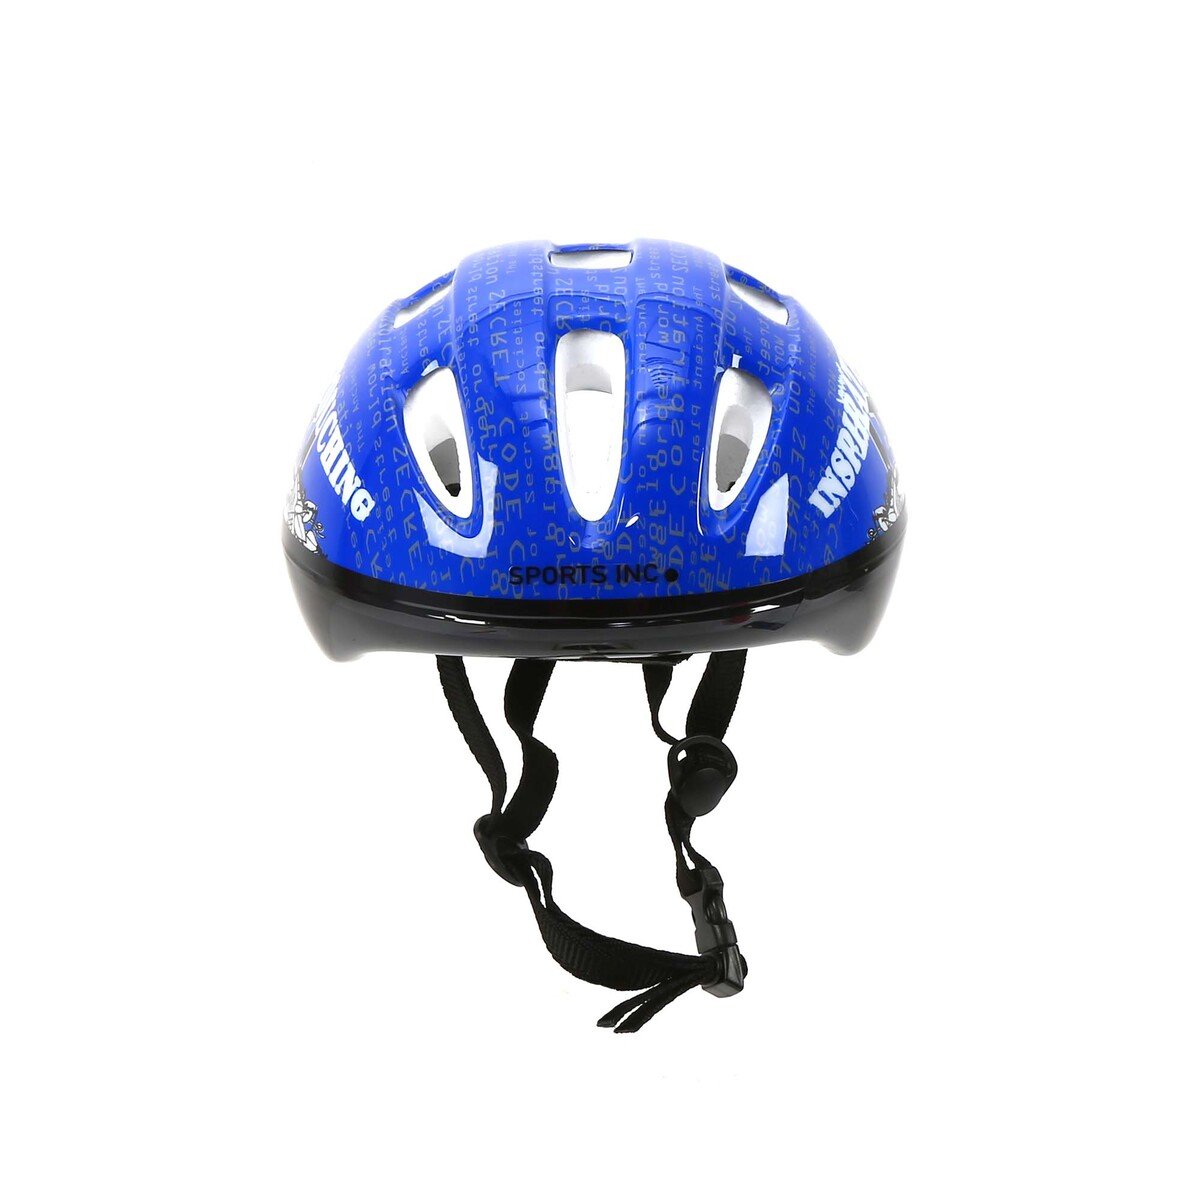 Sports Inc Kids Skate Helmet PW-904 Medium